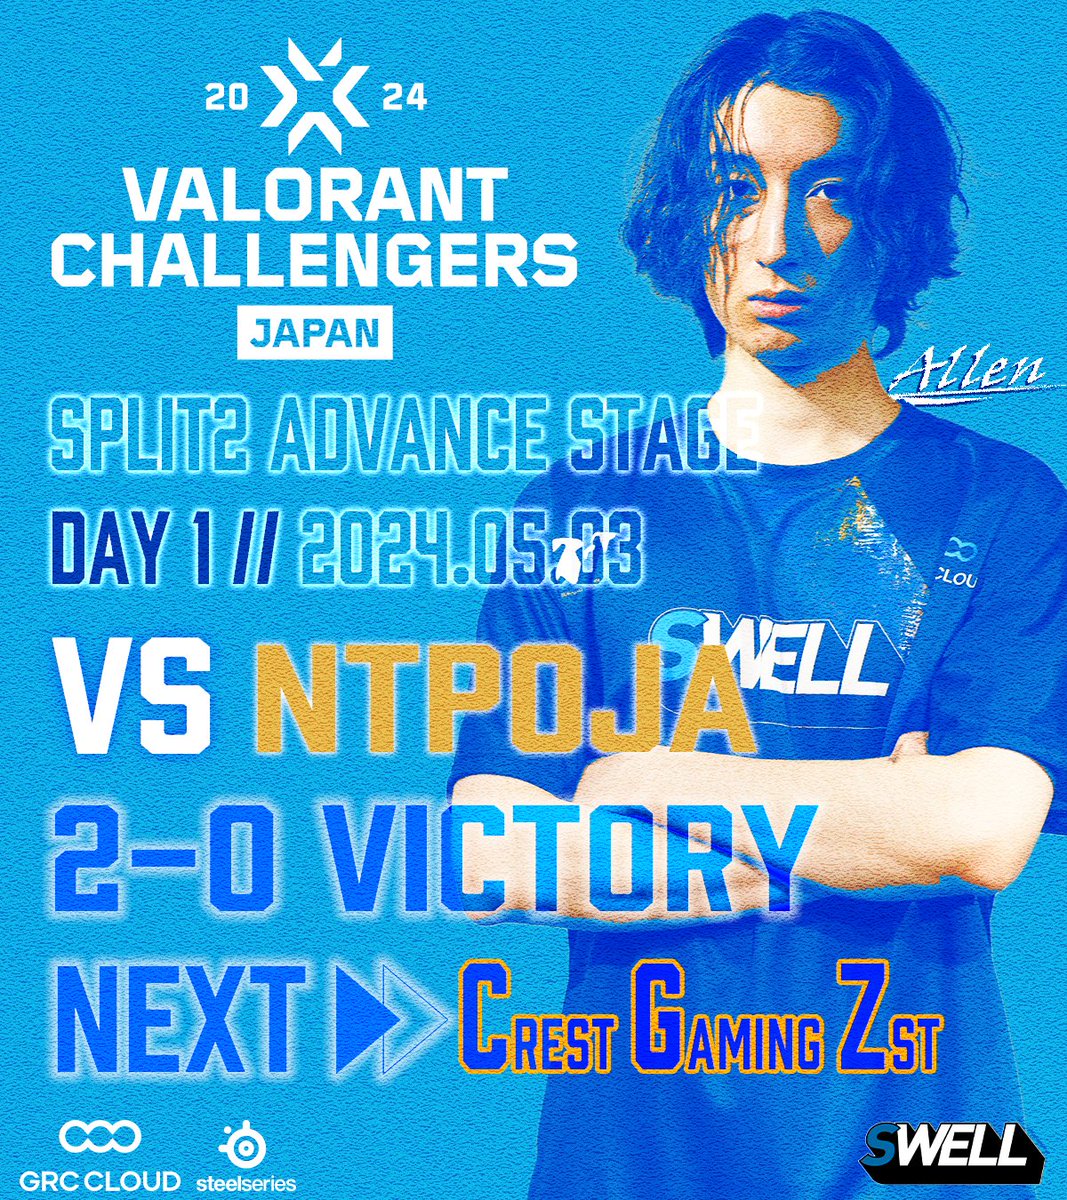 ▍#VALORANT Challengers Japan Split 2
Advance Stage DAY1

First-Round>>WIN

➡NEXT vs @crest_gaming 

#BCSWIN #ChallengersJP